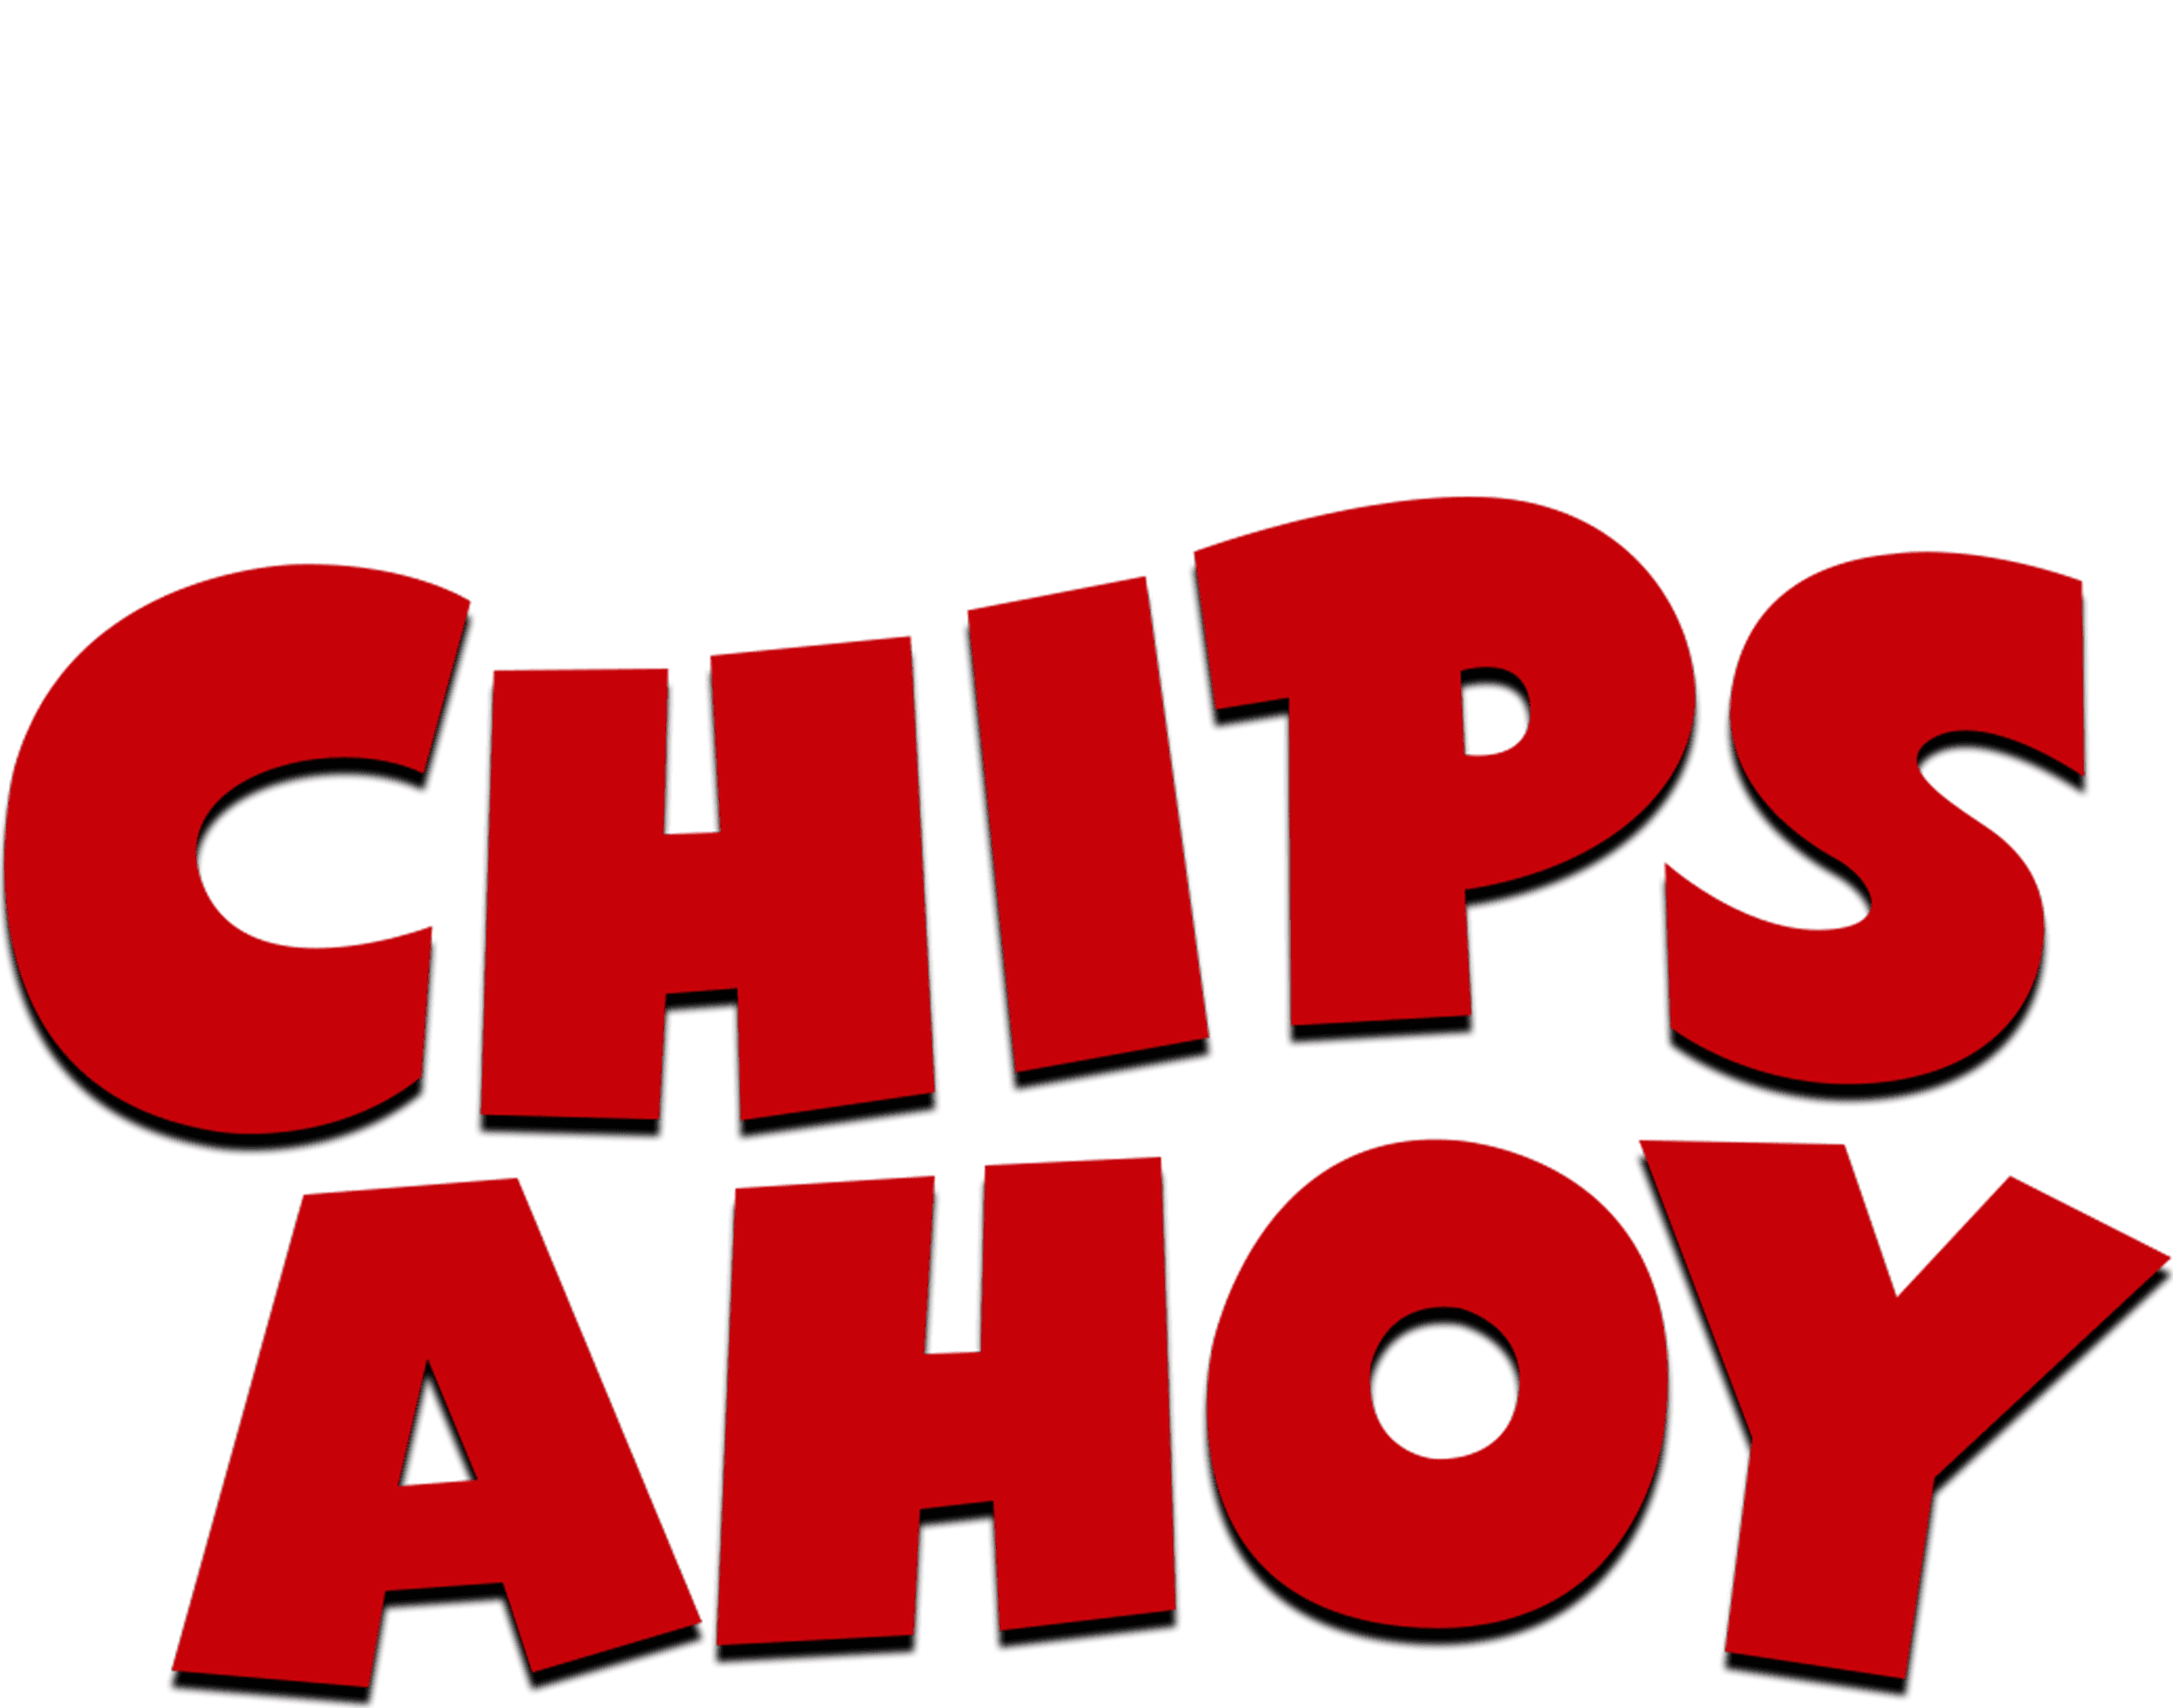 Chips Ahoy logo